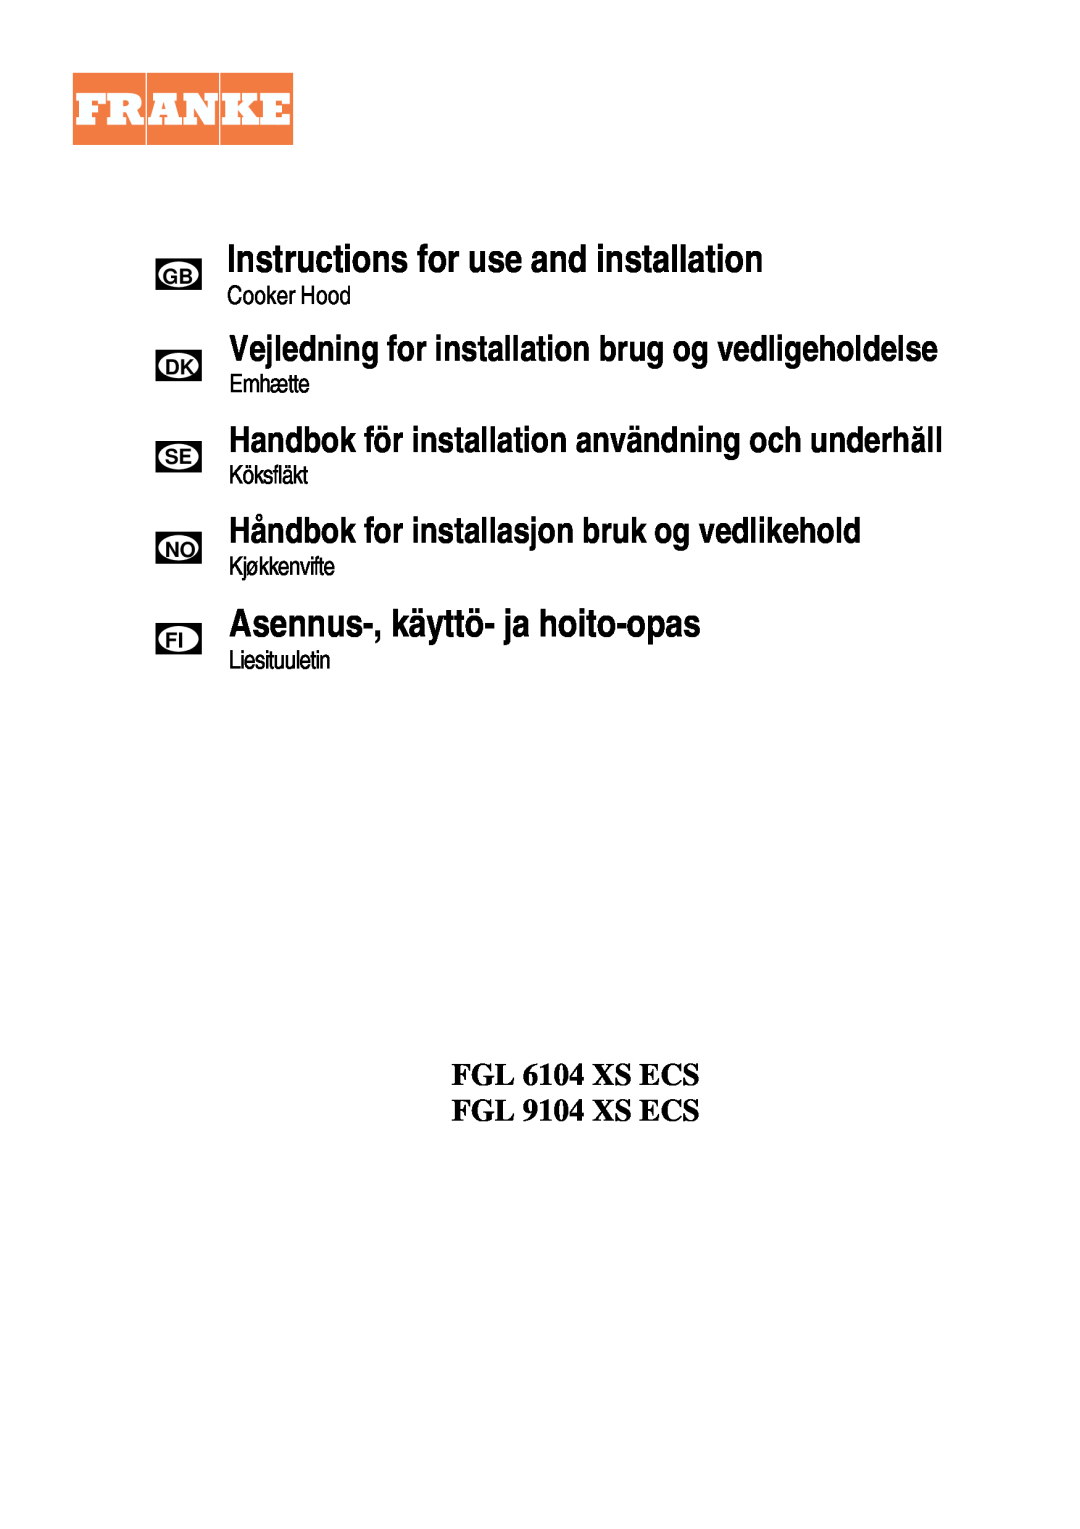 Franke Consumer Products FGL 9104 XS ECS manual Instructions for use and installation, Asennus-, käyttö- ja hoito-opas 